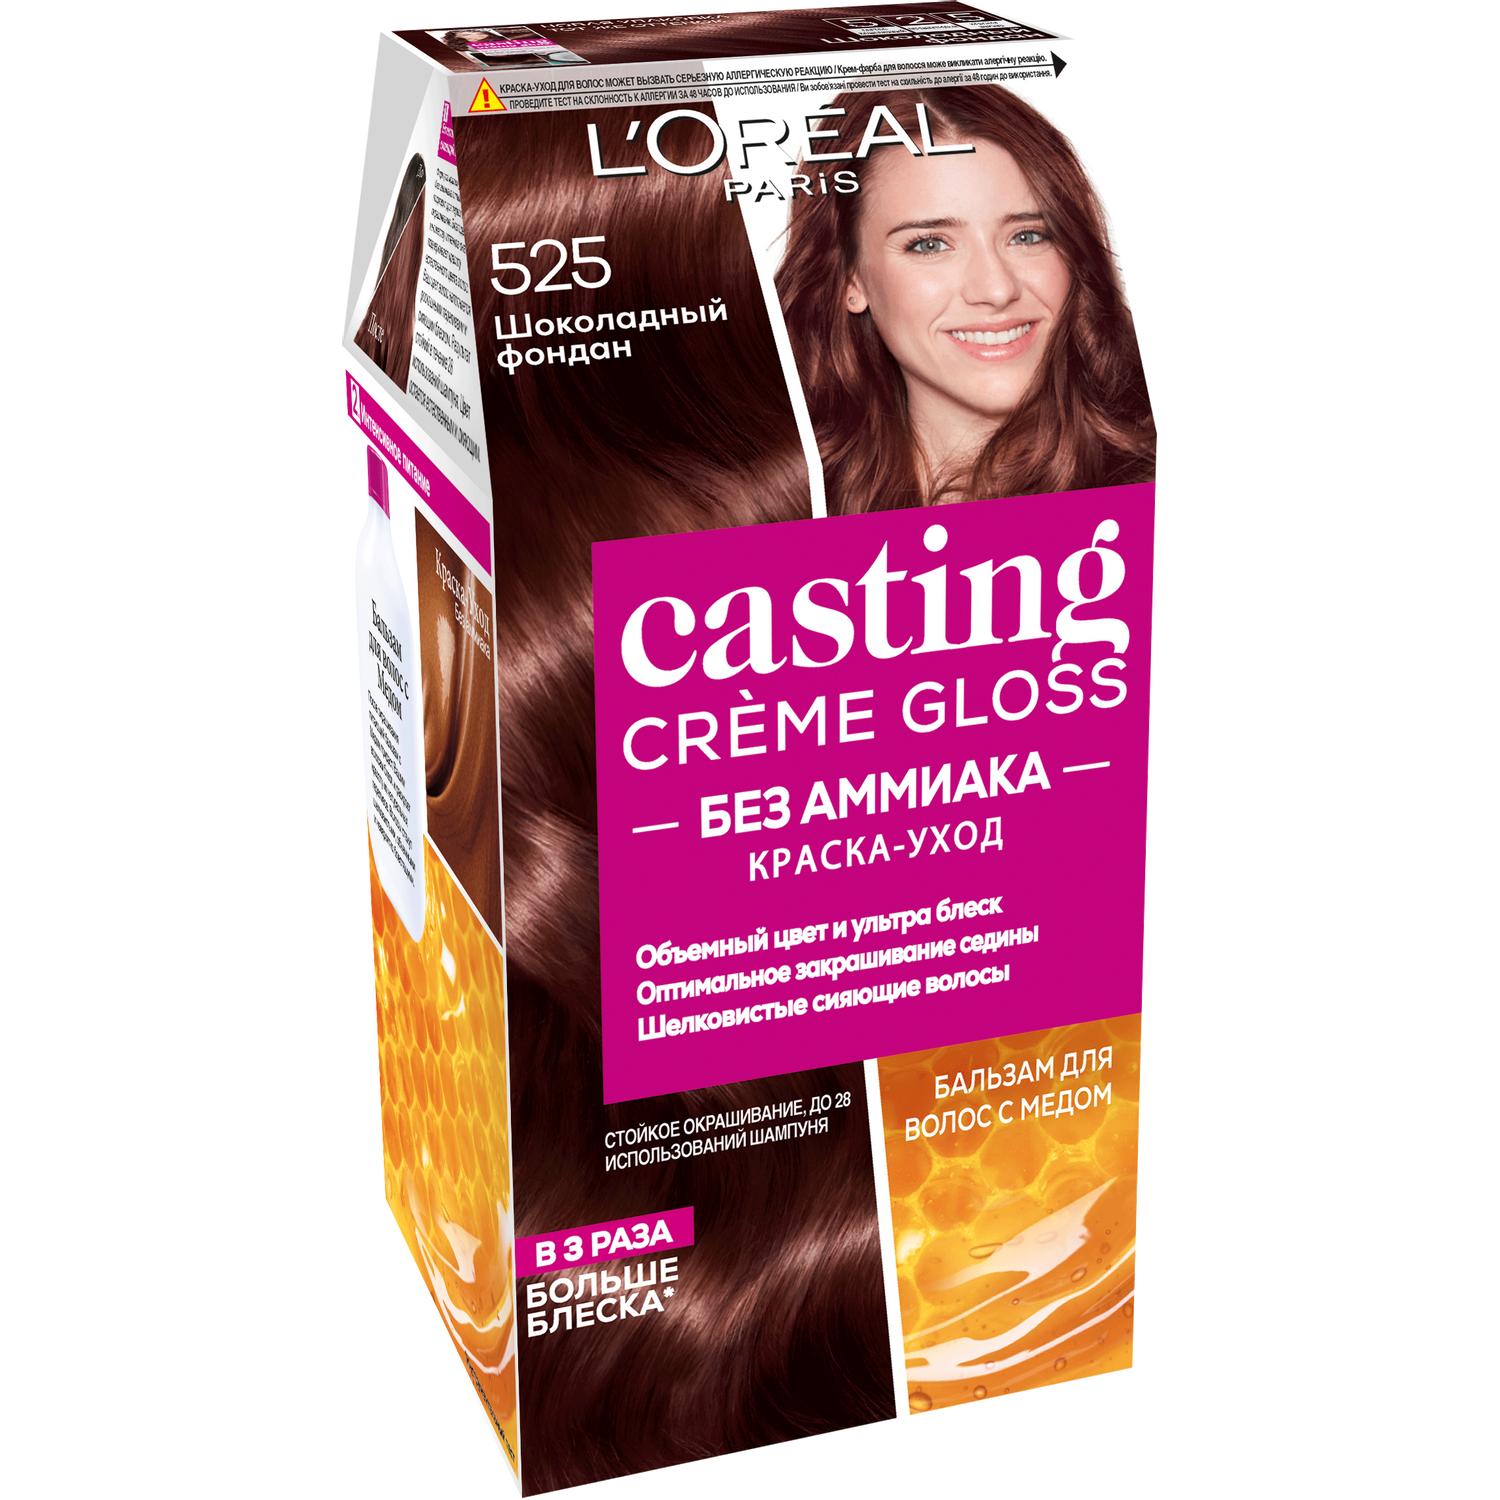 Краска для волос L'Oreal Paris Casting Creme Gloss 525 Шоколадный фондан краска l’oreal casting creme gloss 415 254 мл морозный каштан а3123800